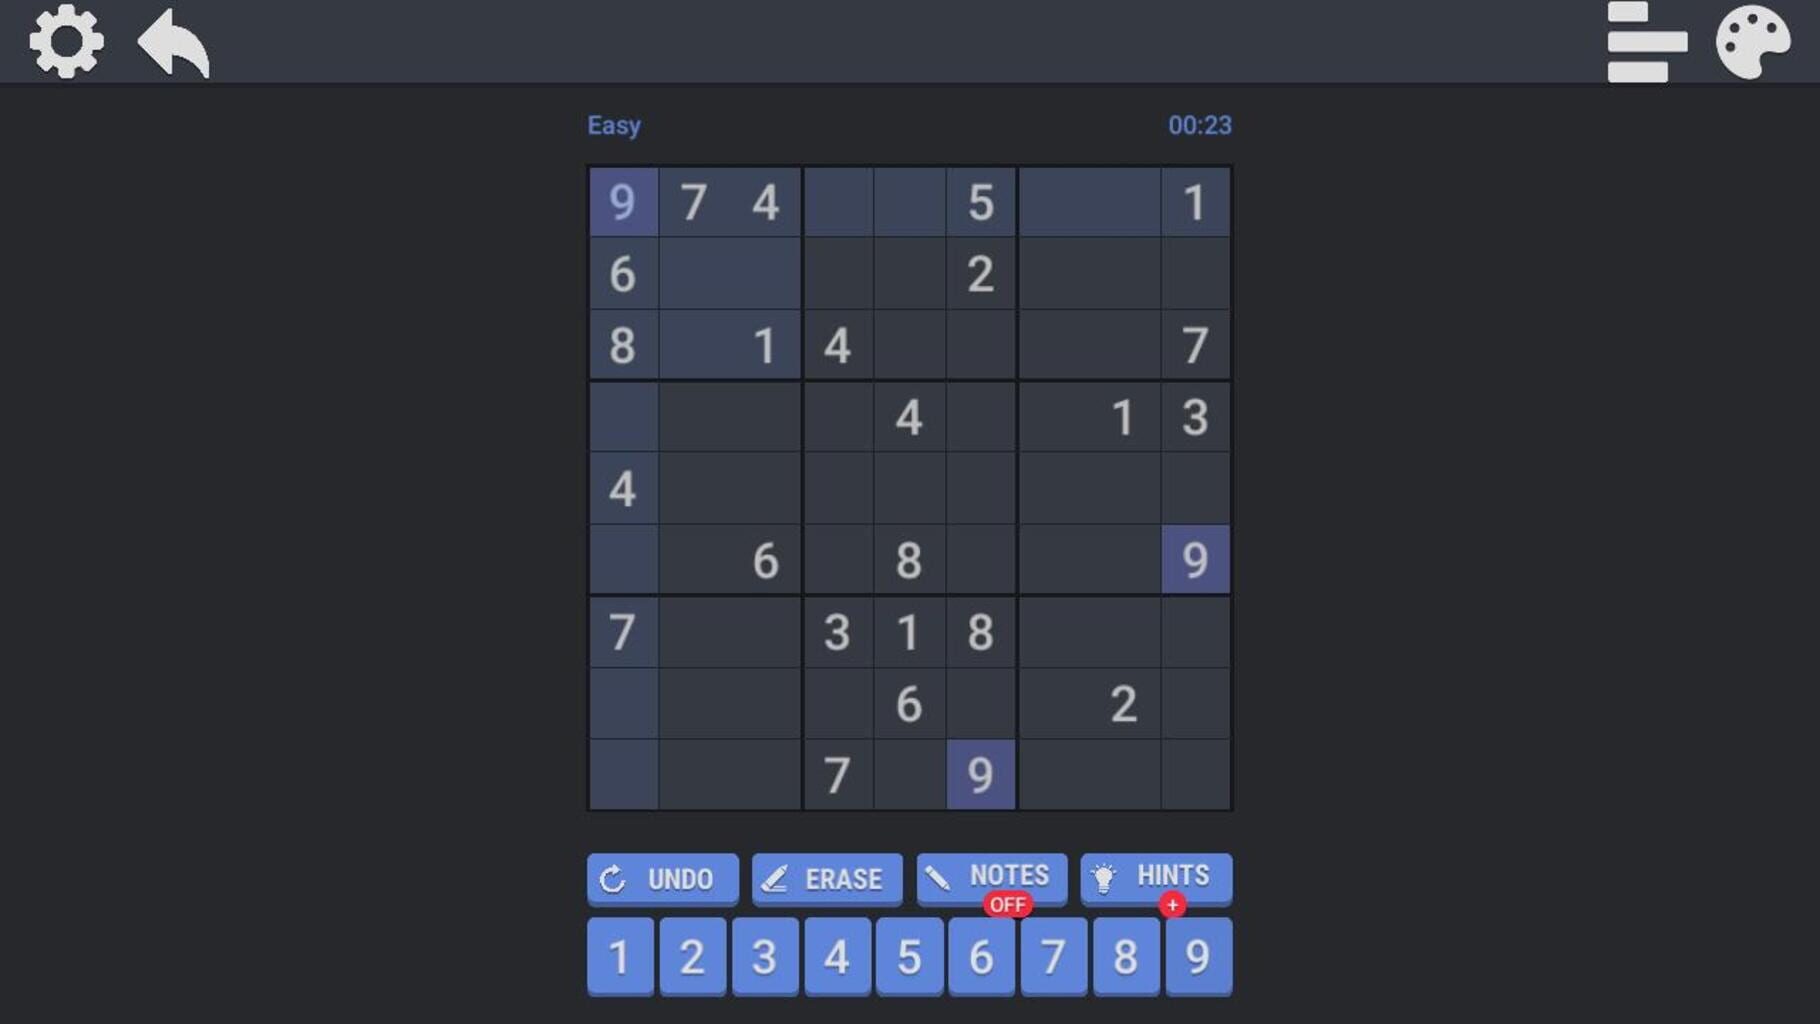 Captura de pantalla - Numbers and Squares